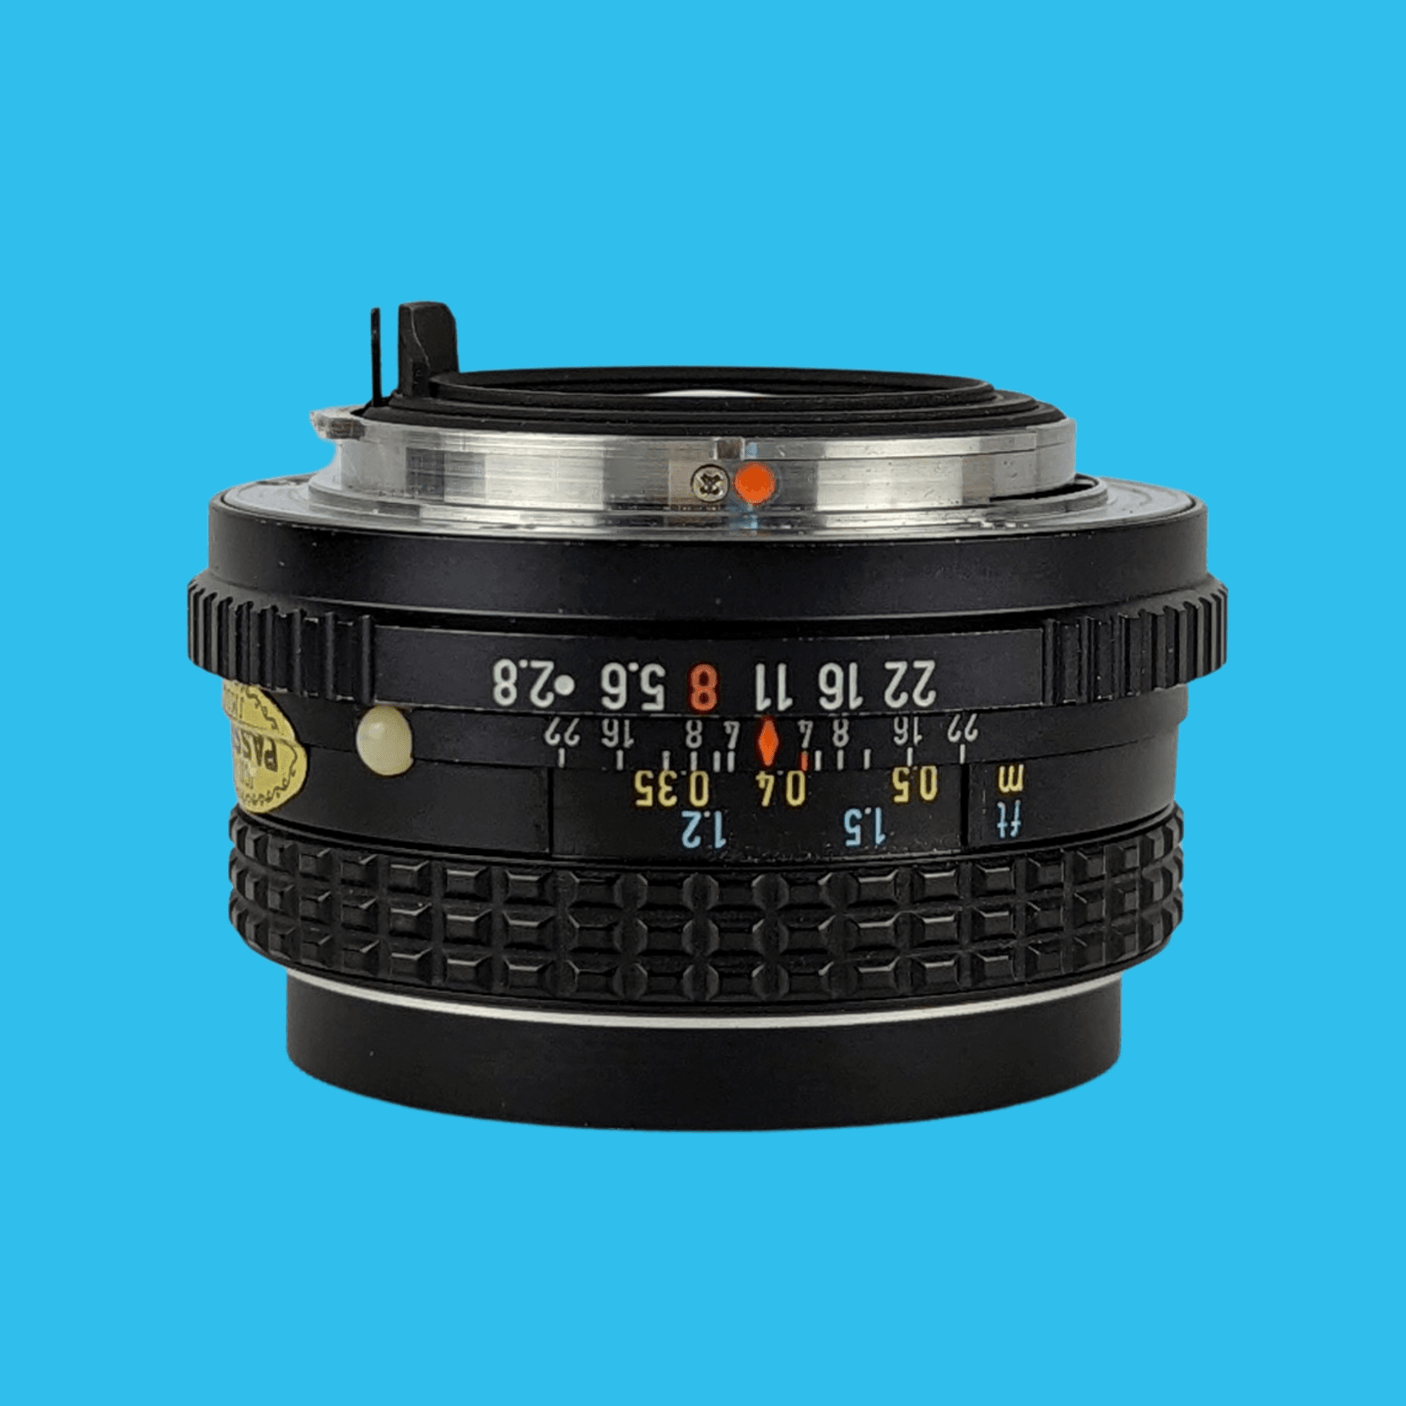 Pentax-M SMC 28mm f/2.8 Camera Lens